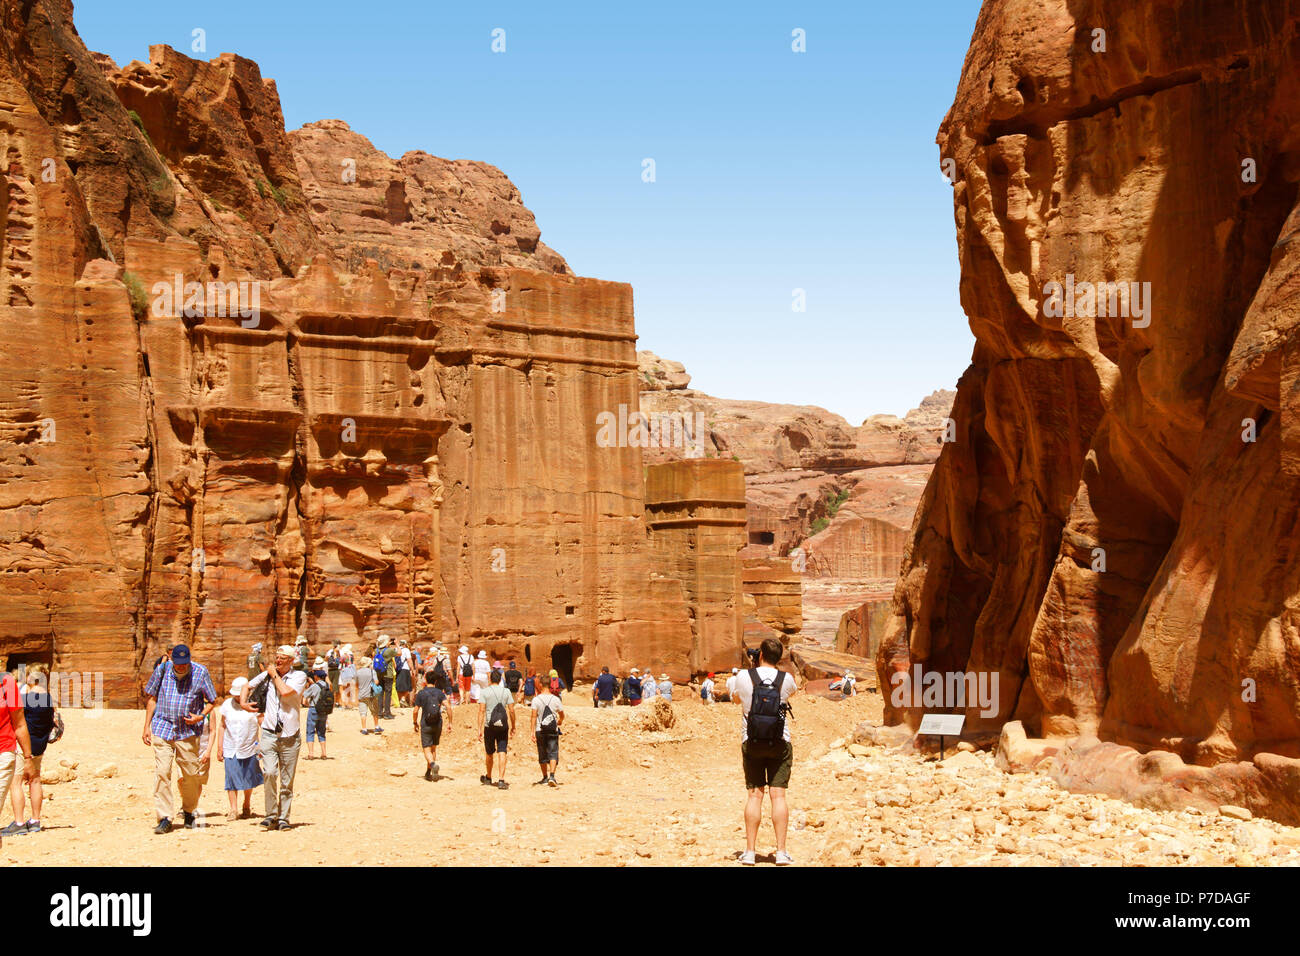 Petra, Jordania - Mayo 3, 2018: tumbas talladas en la roca en Petra, la antigua capital del reino nabateo. Foto de stock